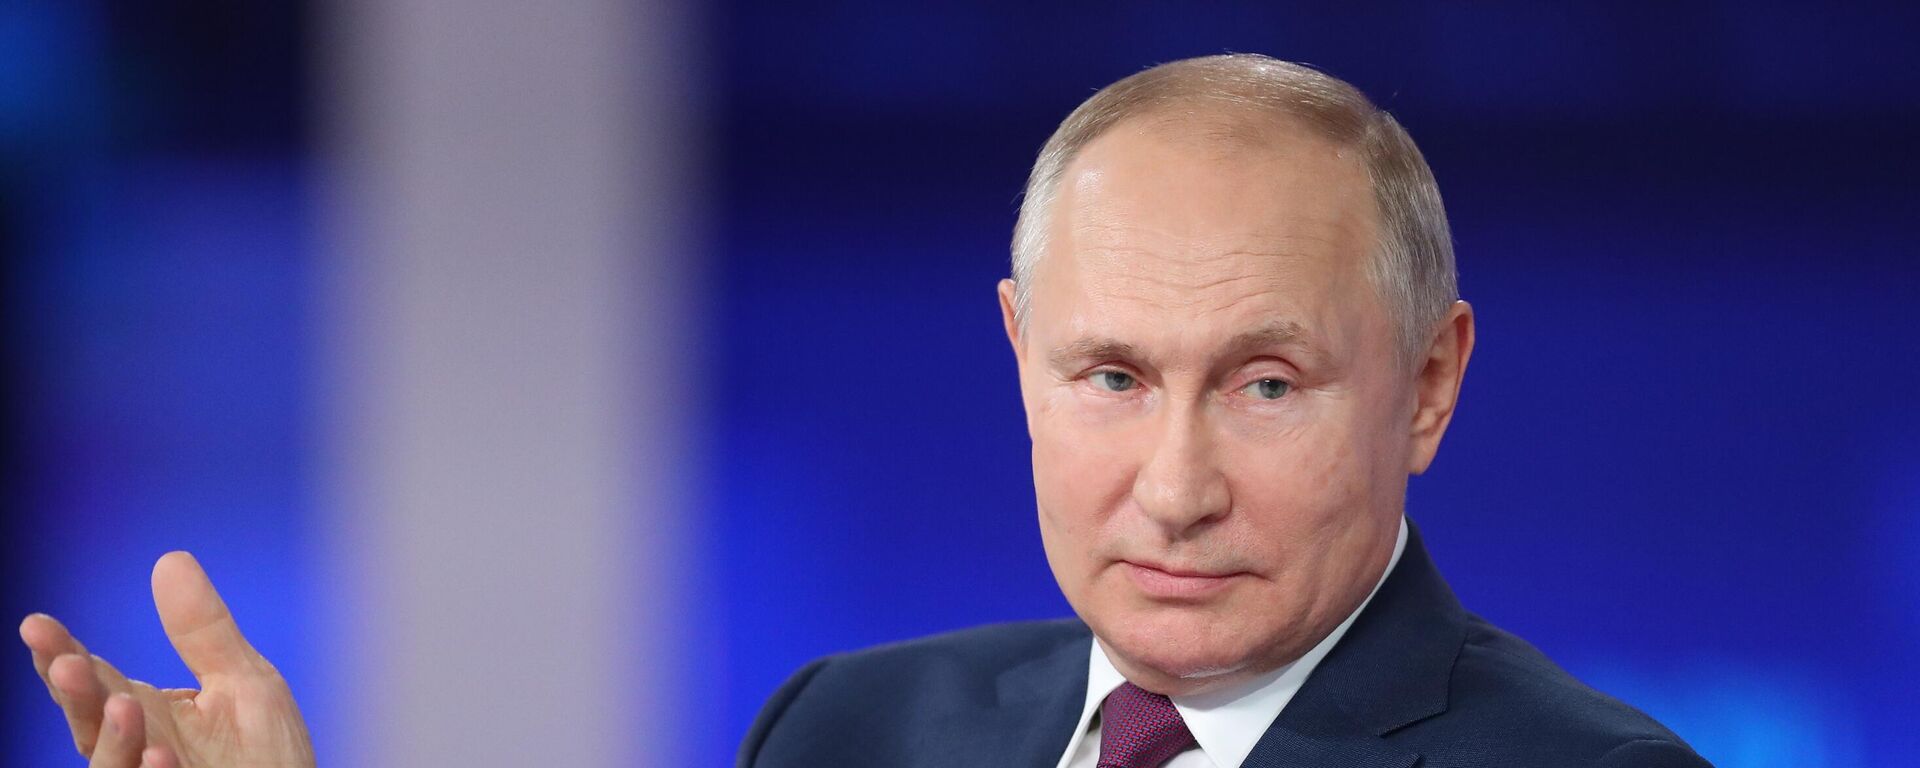 Vladímir Putin, presidente de Rusia - Sputnik Mundo, 1920, 13.07.2021